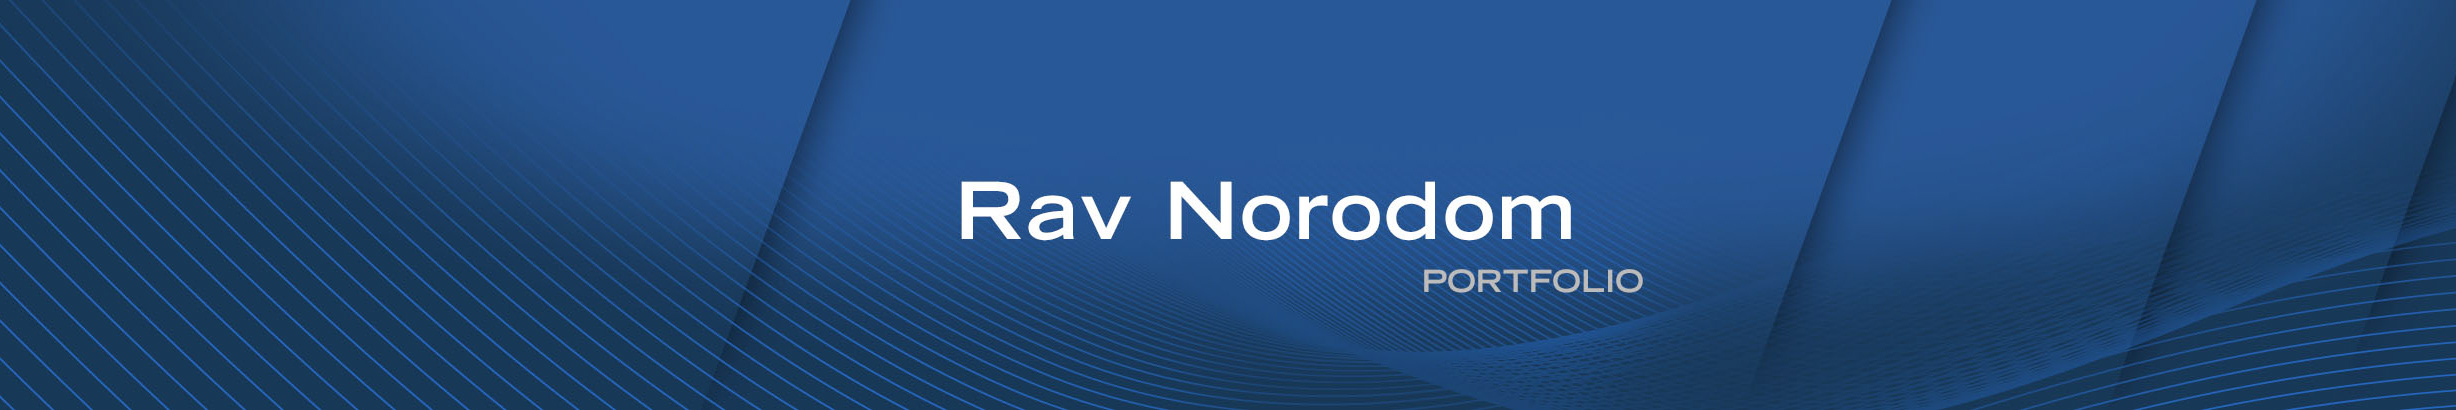 Banner profilu uživatele Rav Norodom